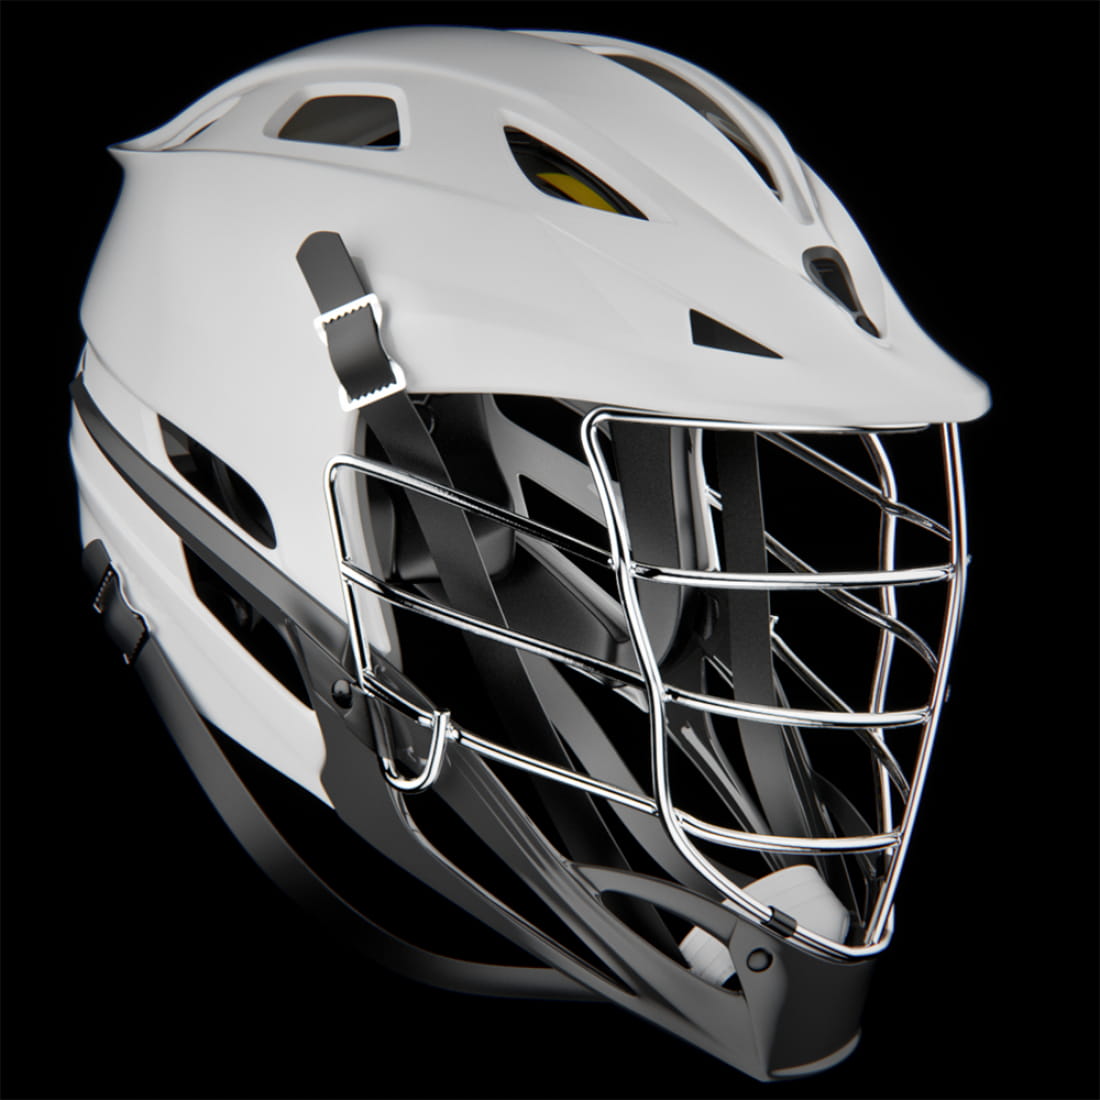 cascade-r-lacrosse-helmet-model-timelapse-